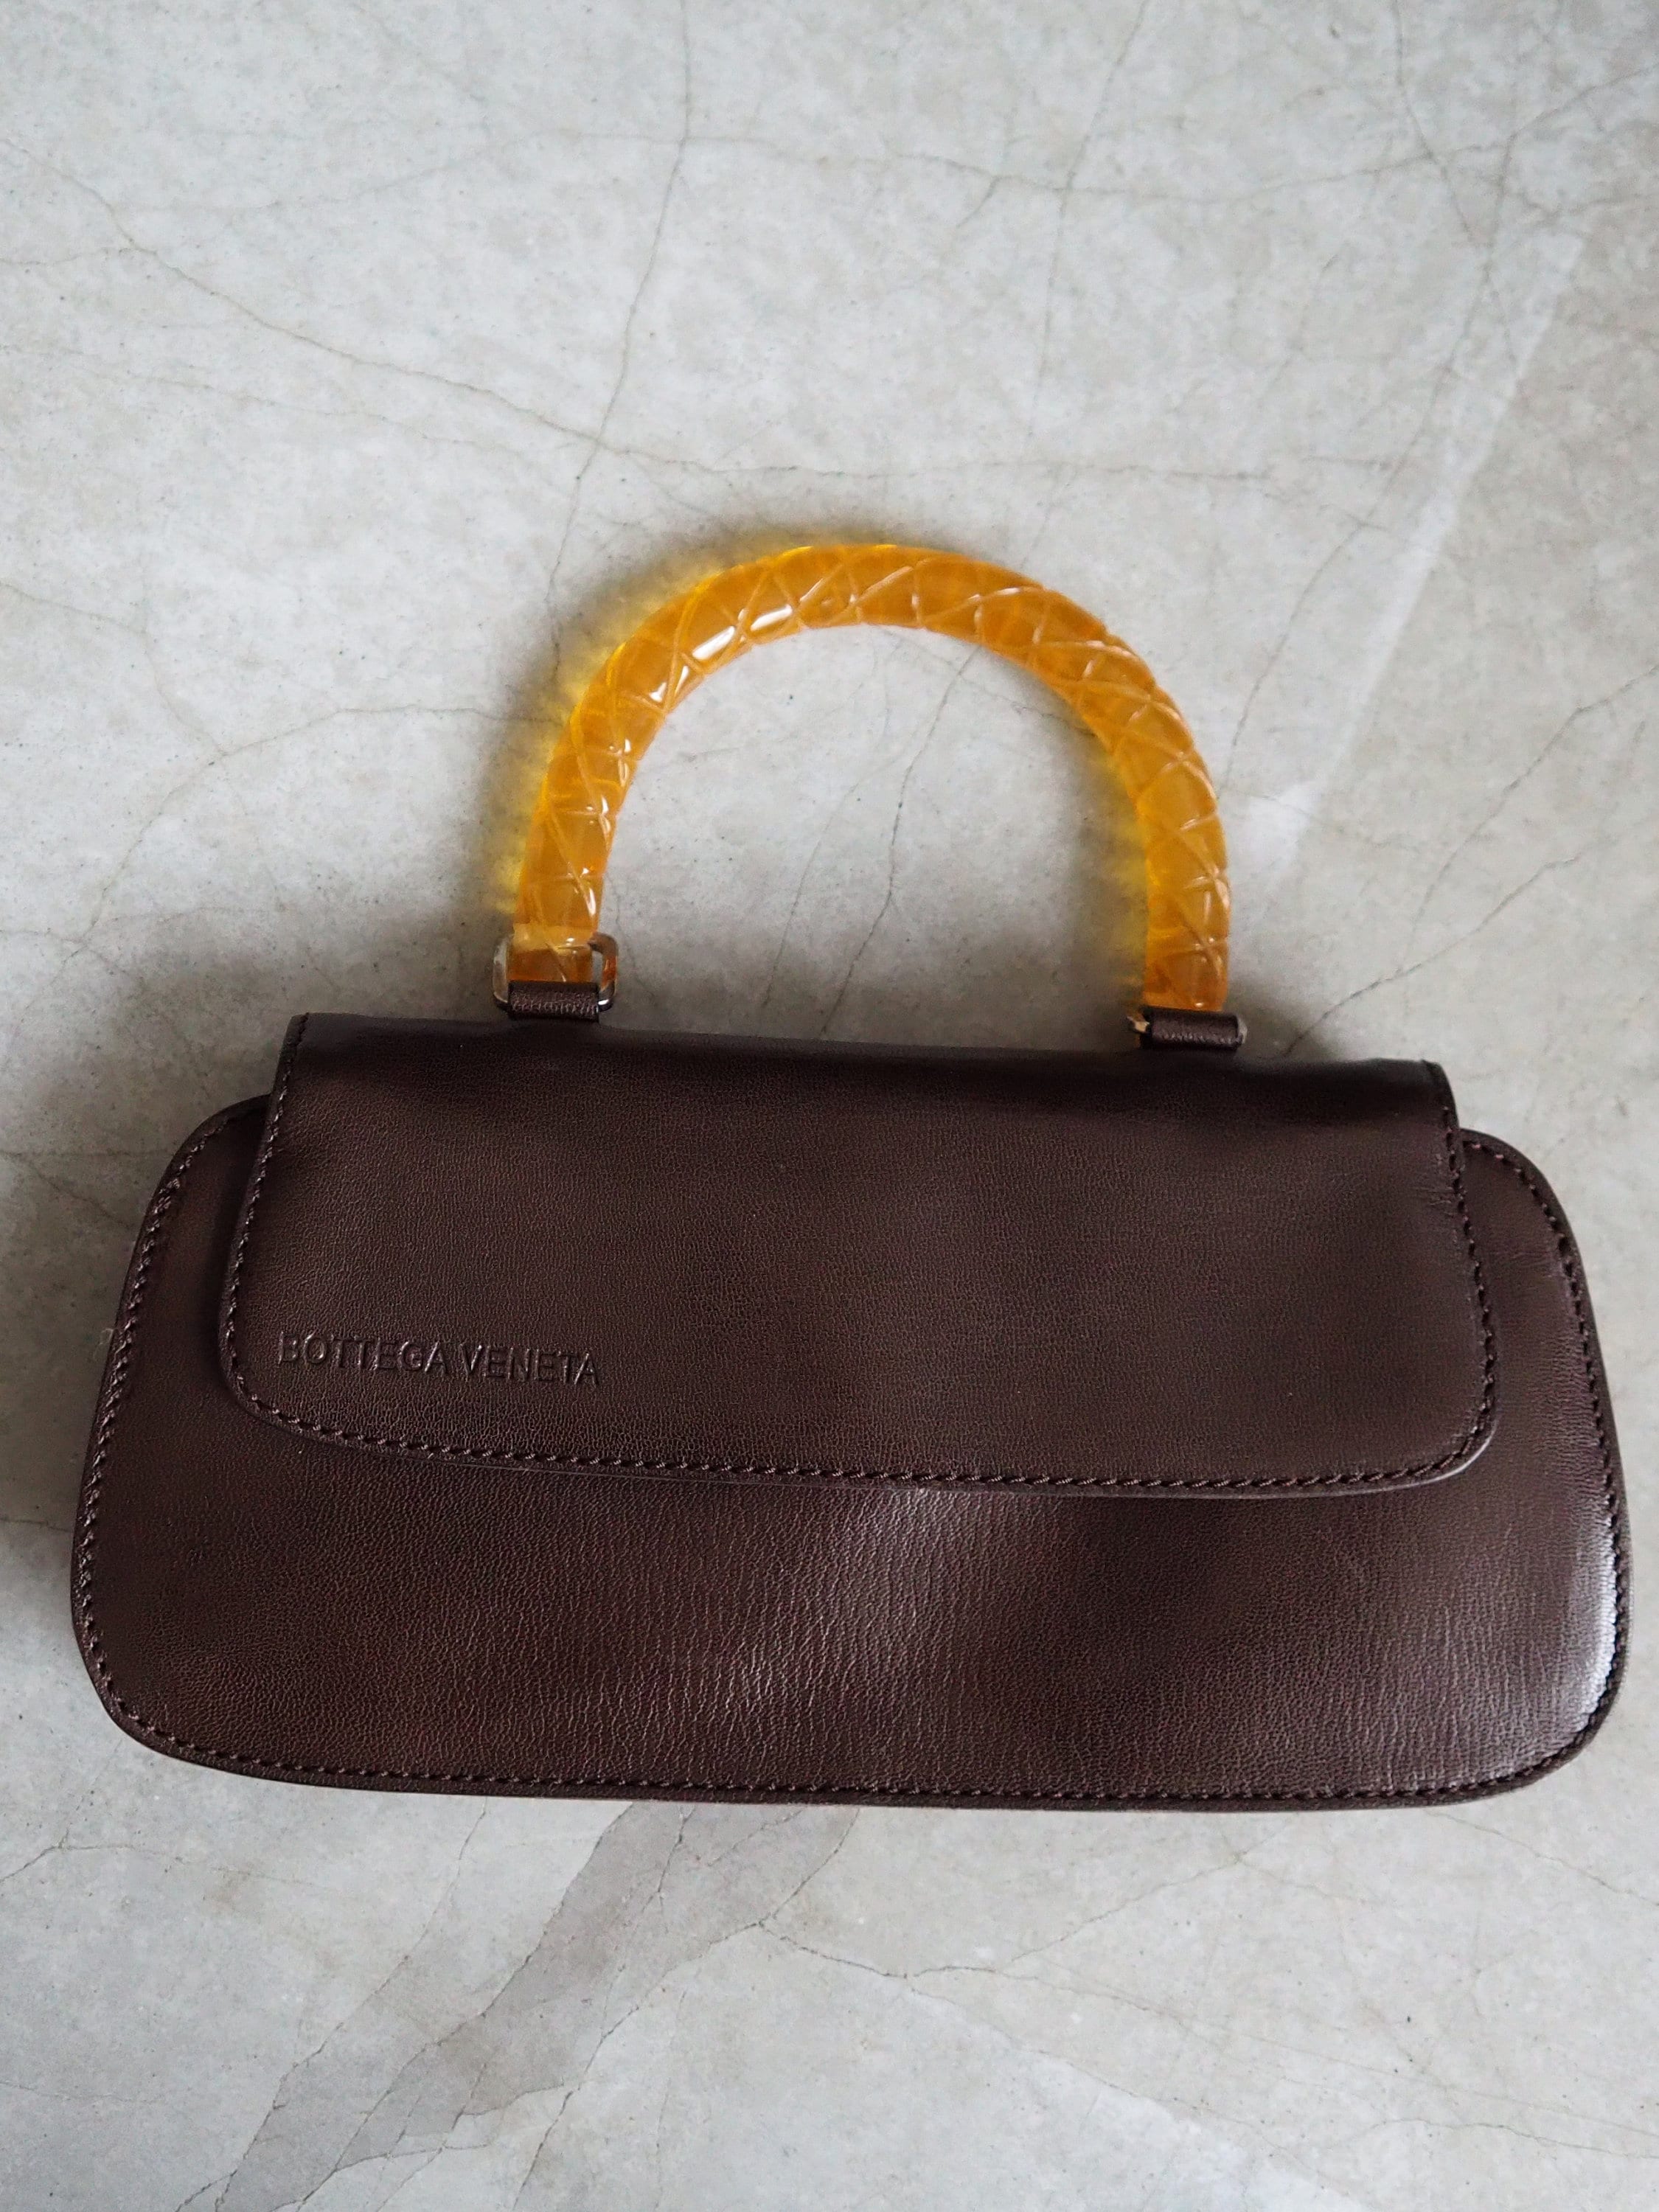 BOTTEGA VENETA Intrechart Handbag Brown Leather Vintage Authentic